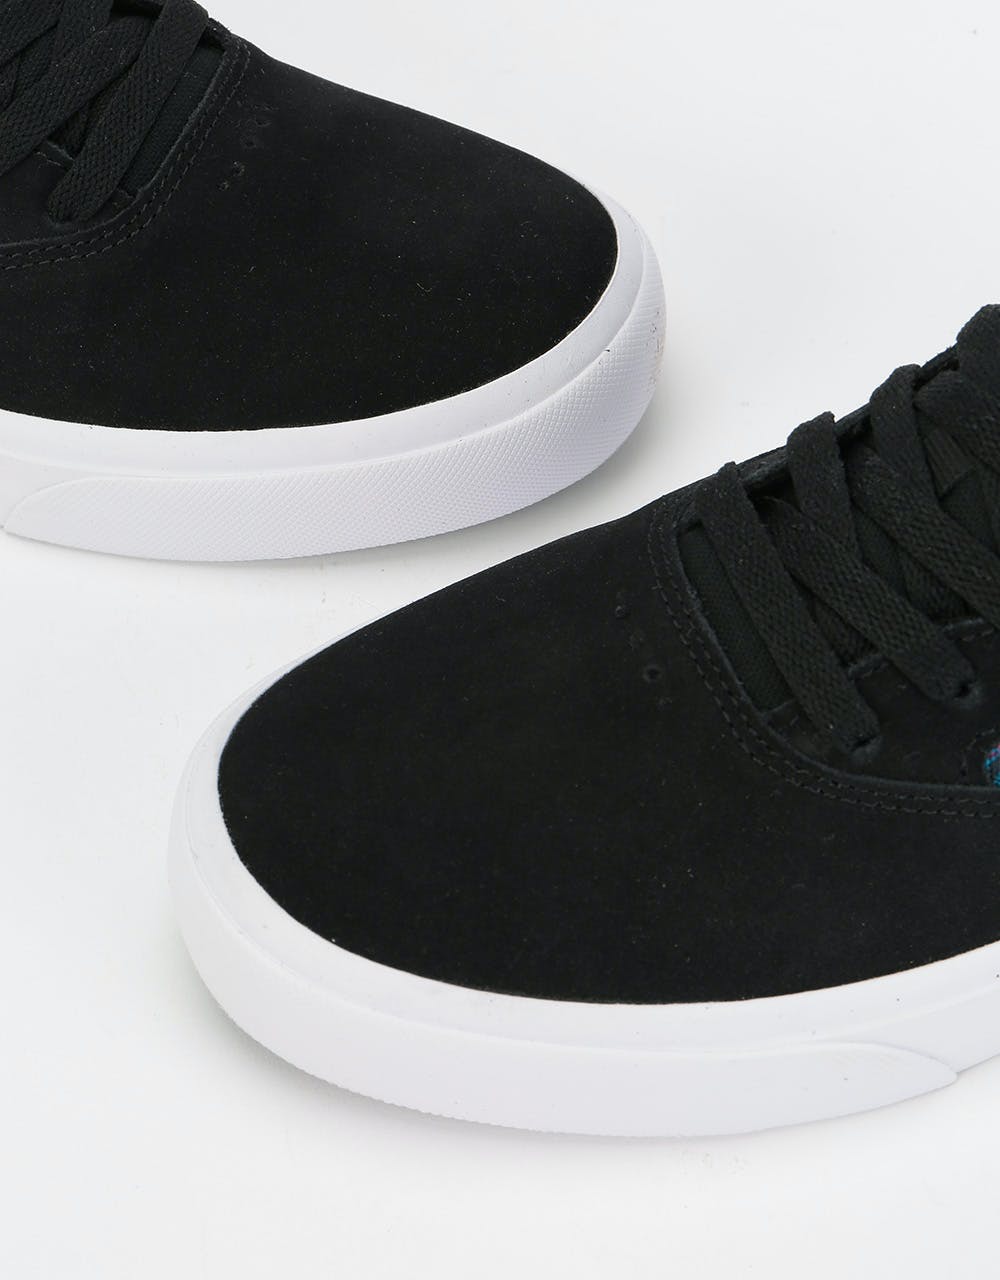 Nike SB Chron Solarsoft Premium Skate Shoes - Black/Black-Laser Blue-White